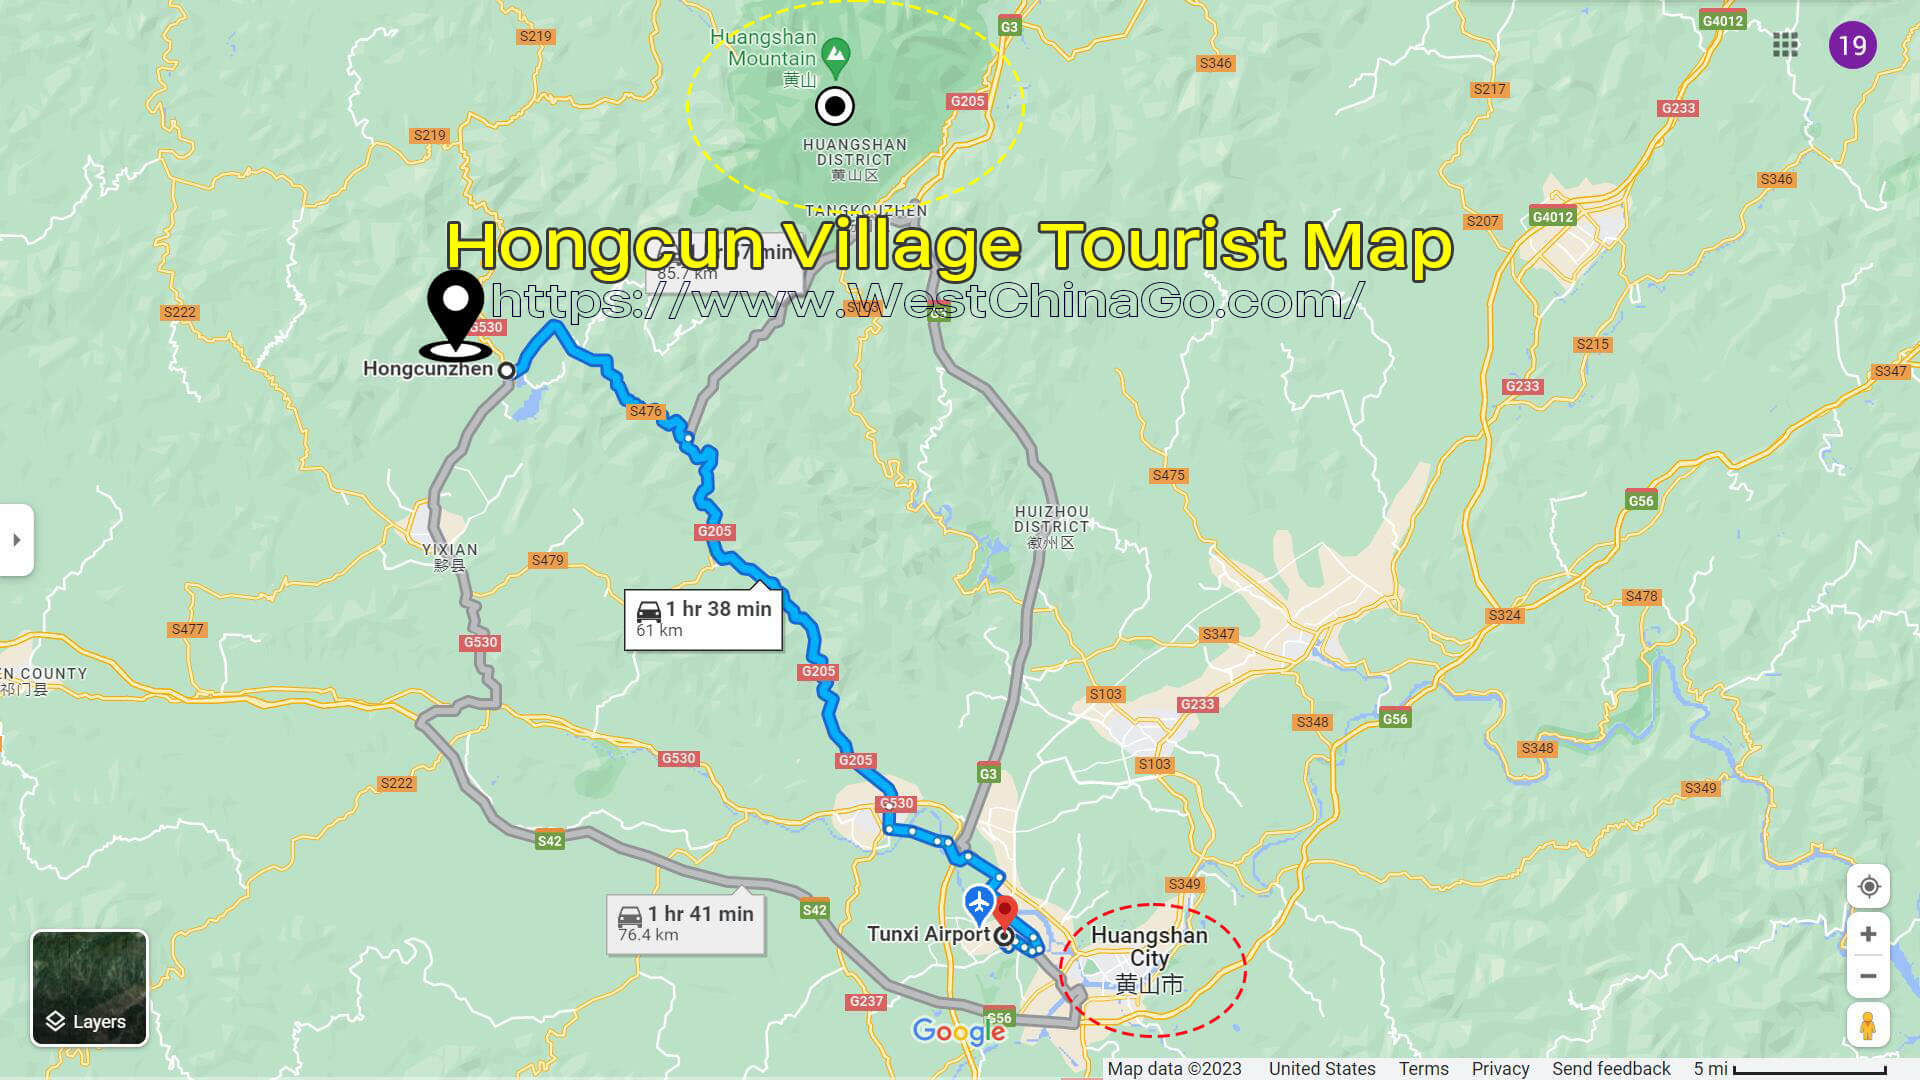 Anhui Huangshan Hongcun Village Tourist Map